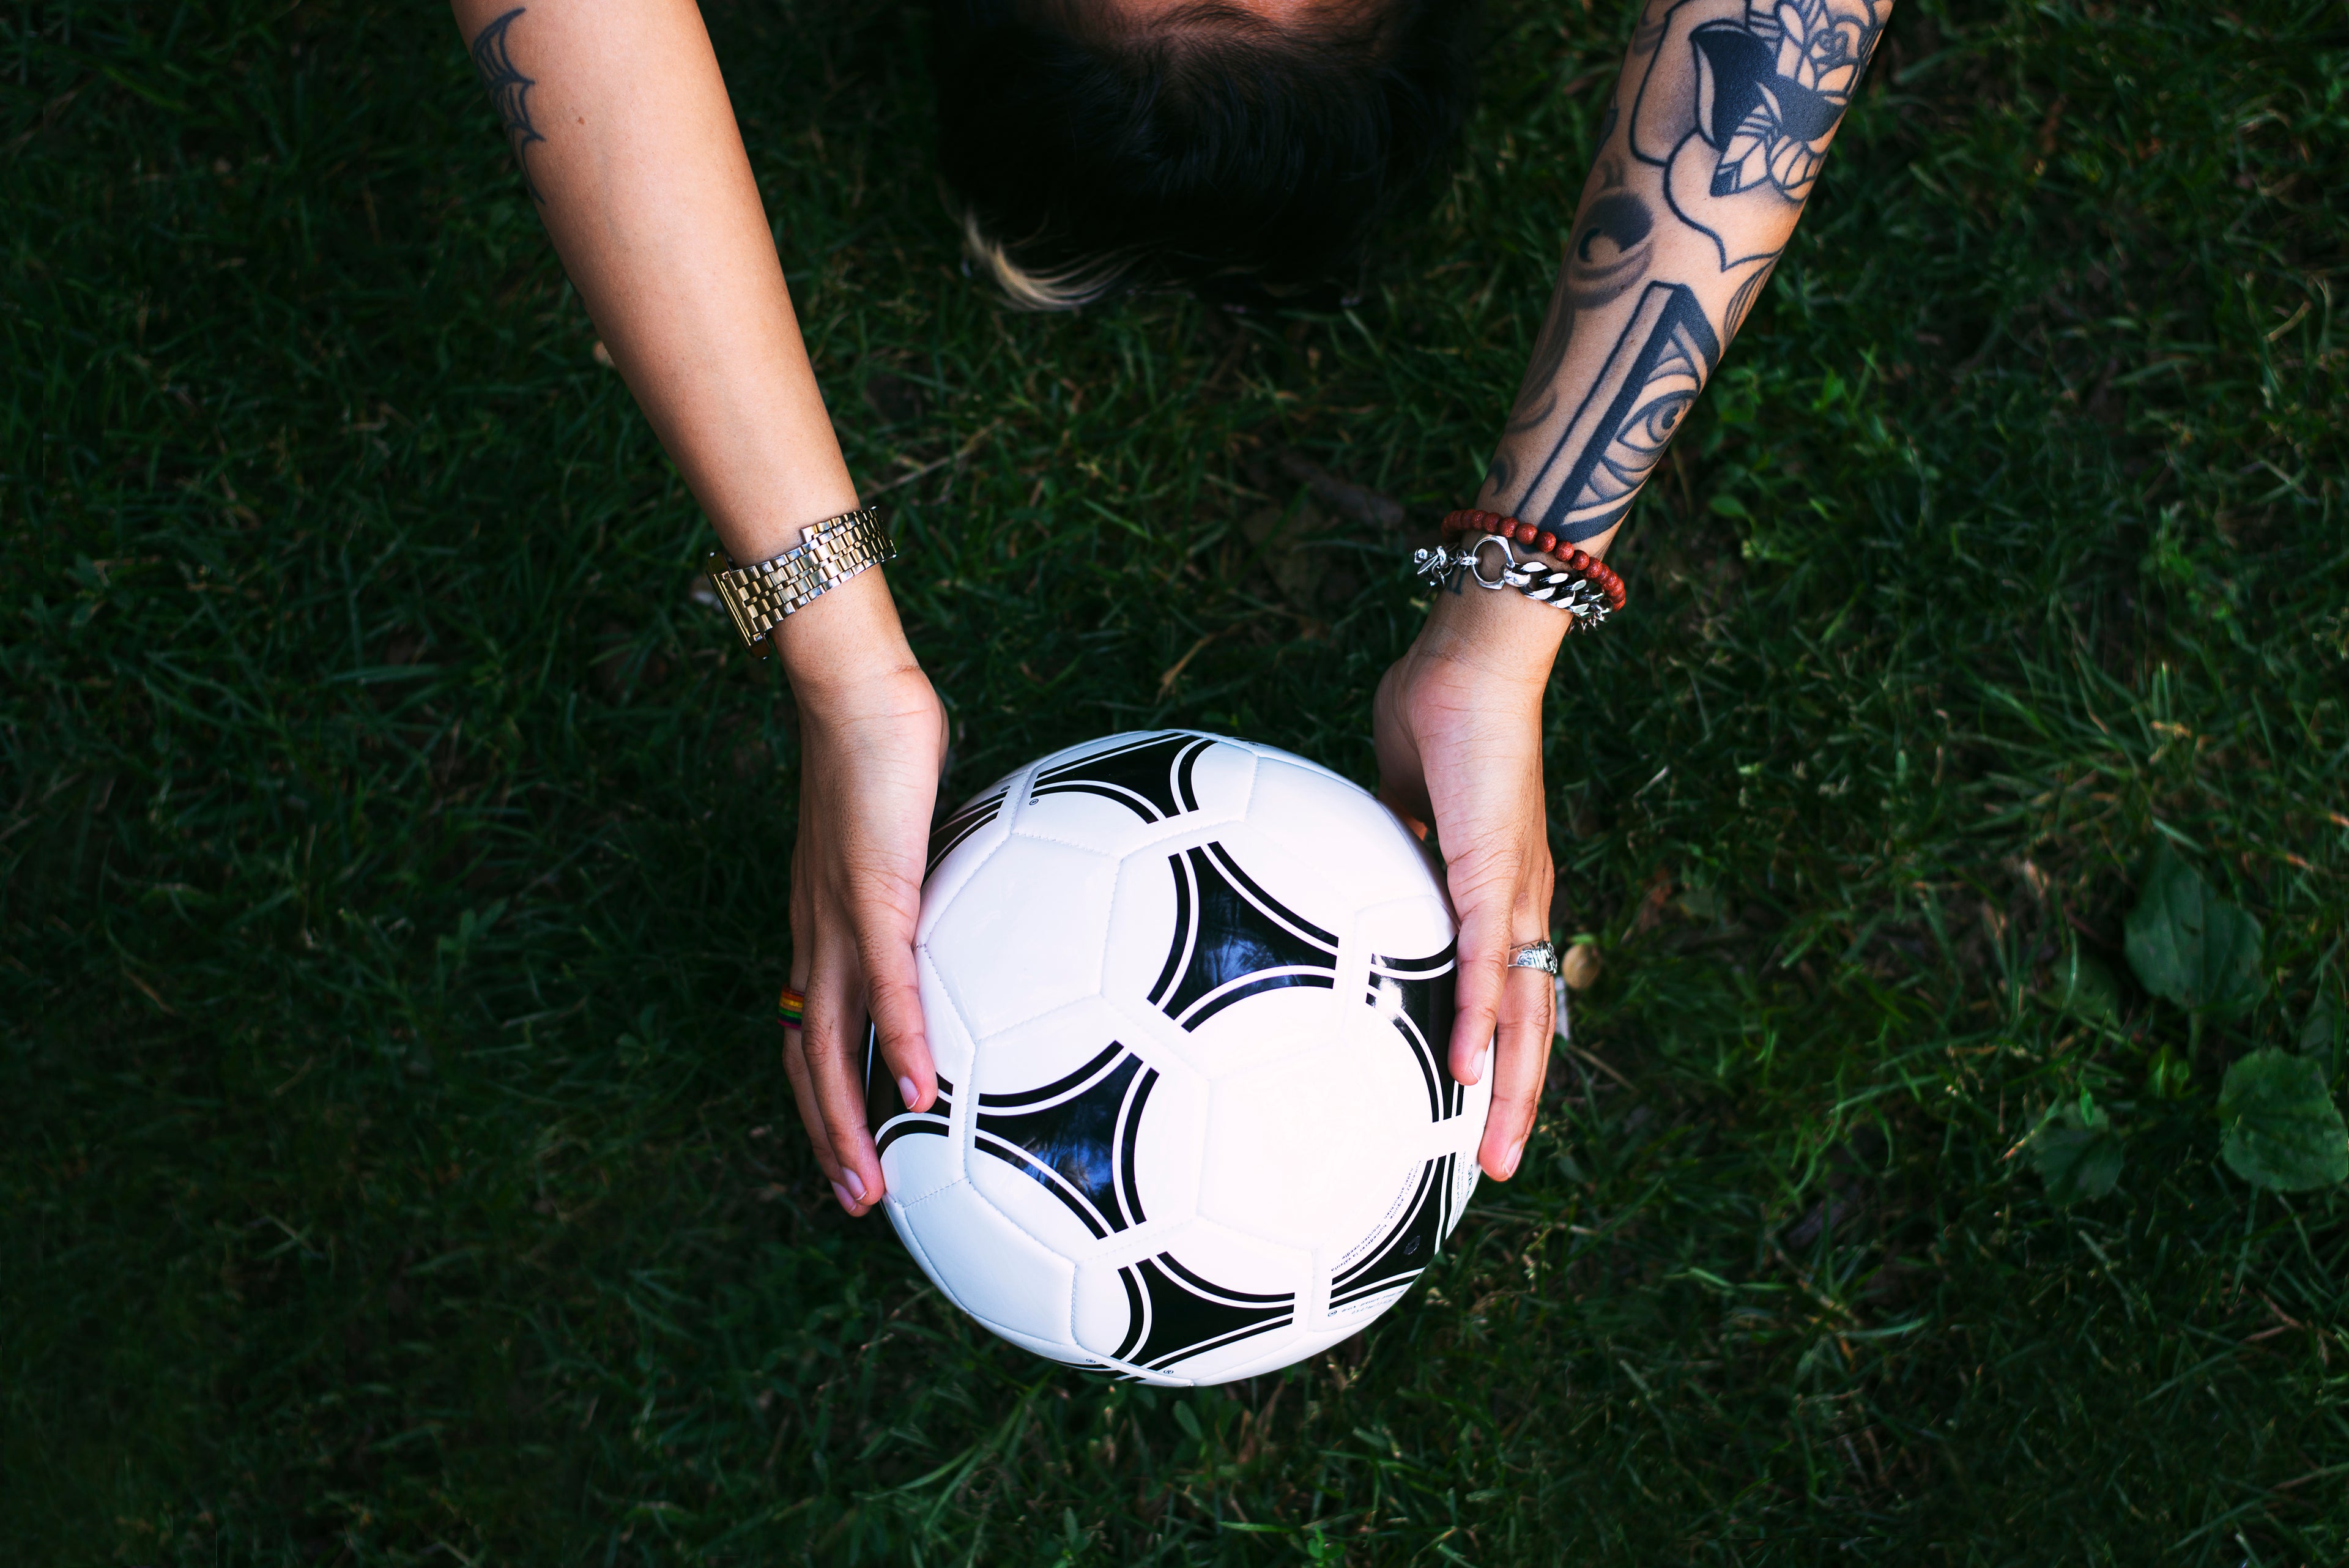 soccer-ball-in-hands-on-grass